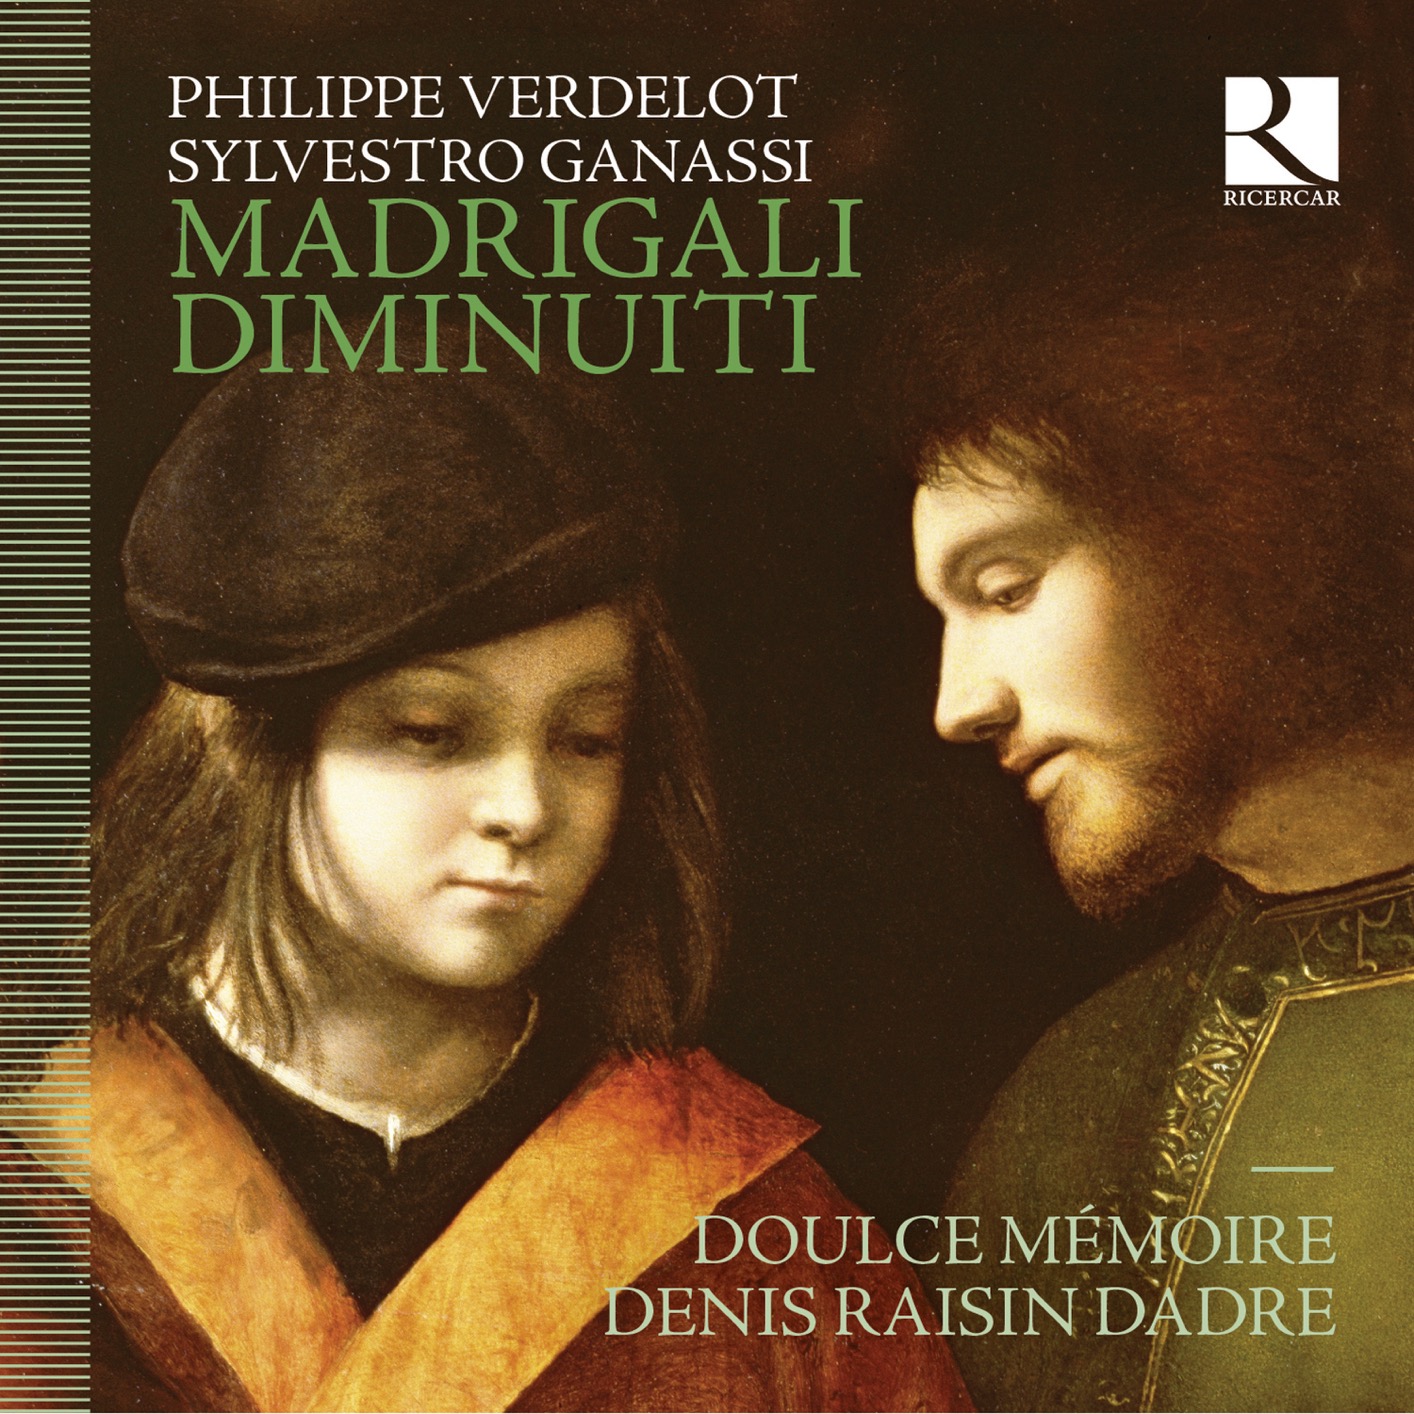 Doulce Memoire & Denis Raisin-Dadre – Verdelot: Madrigali diminuiti (Diminutions inspirees de Sylvestro Ganassi) (2016) [Qobuz FLAC 24bit/88,2kHz]